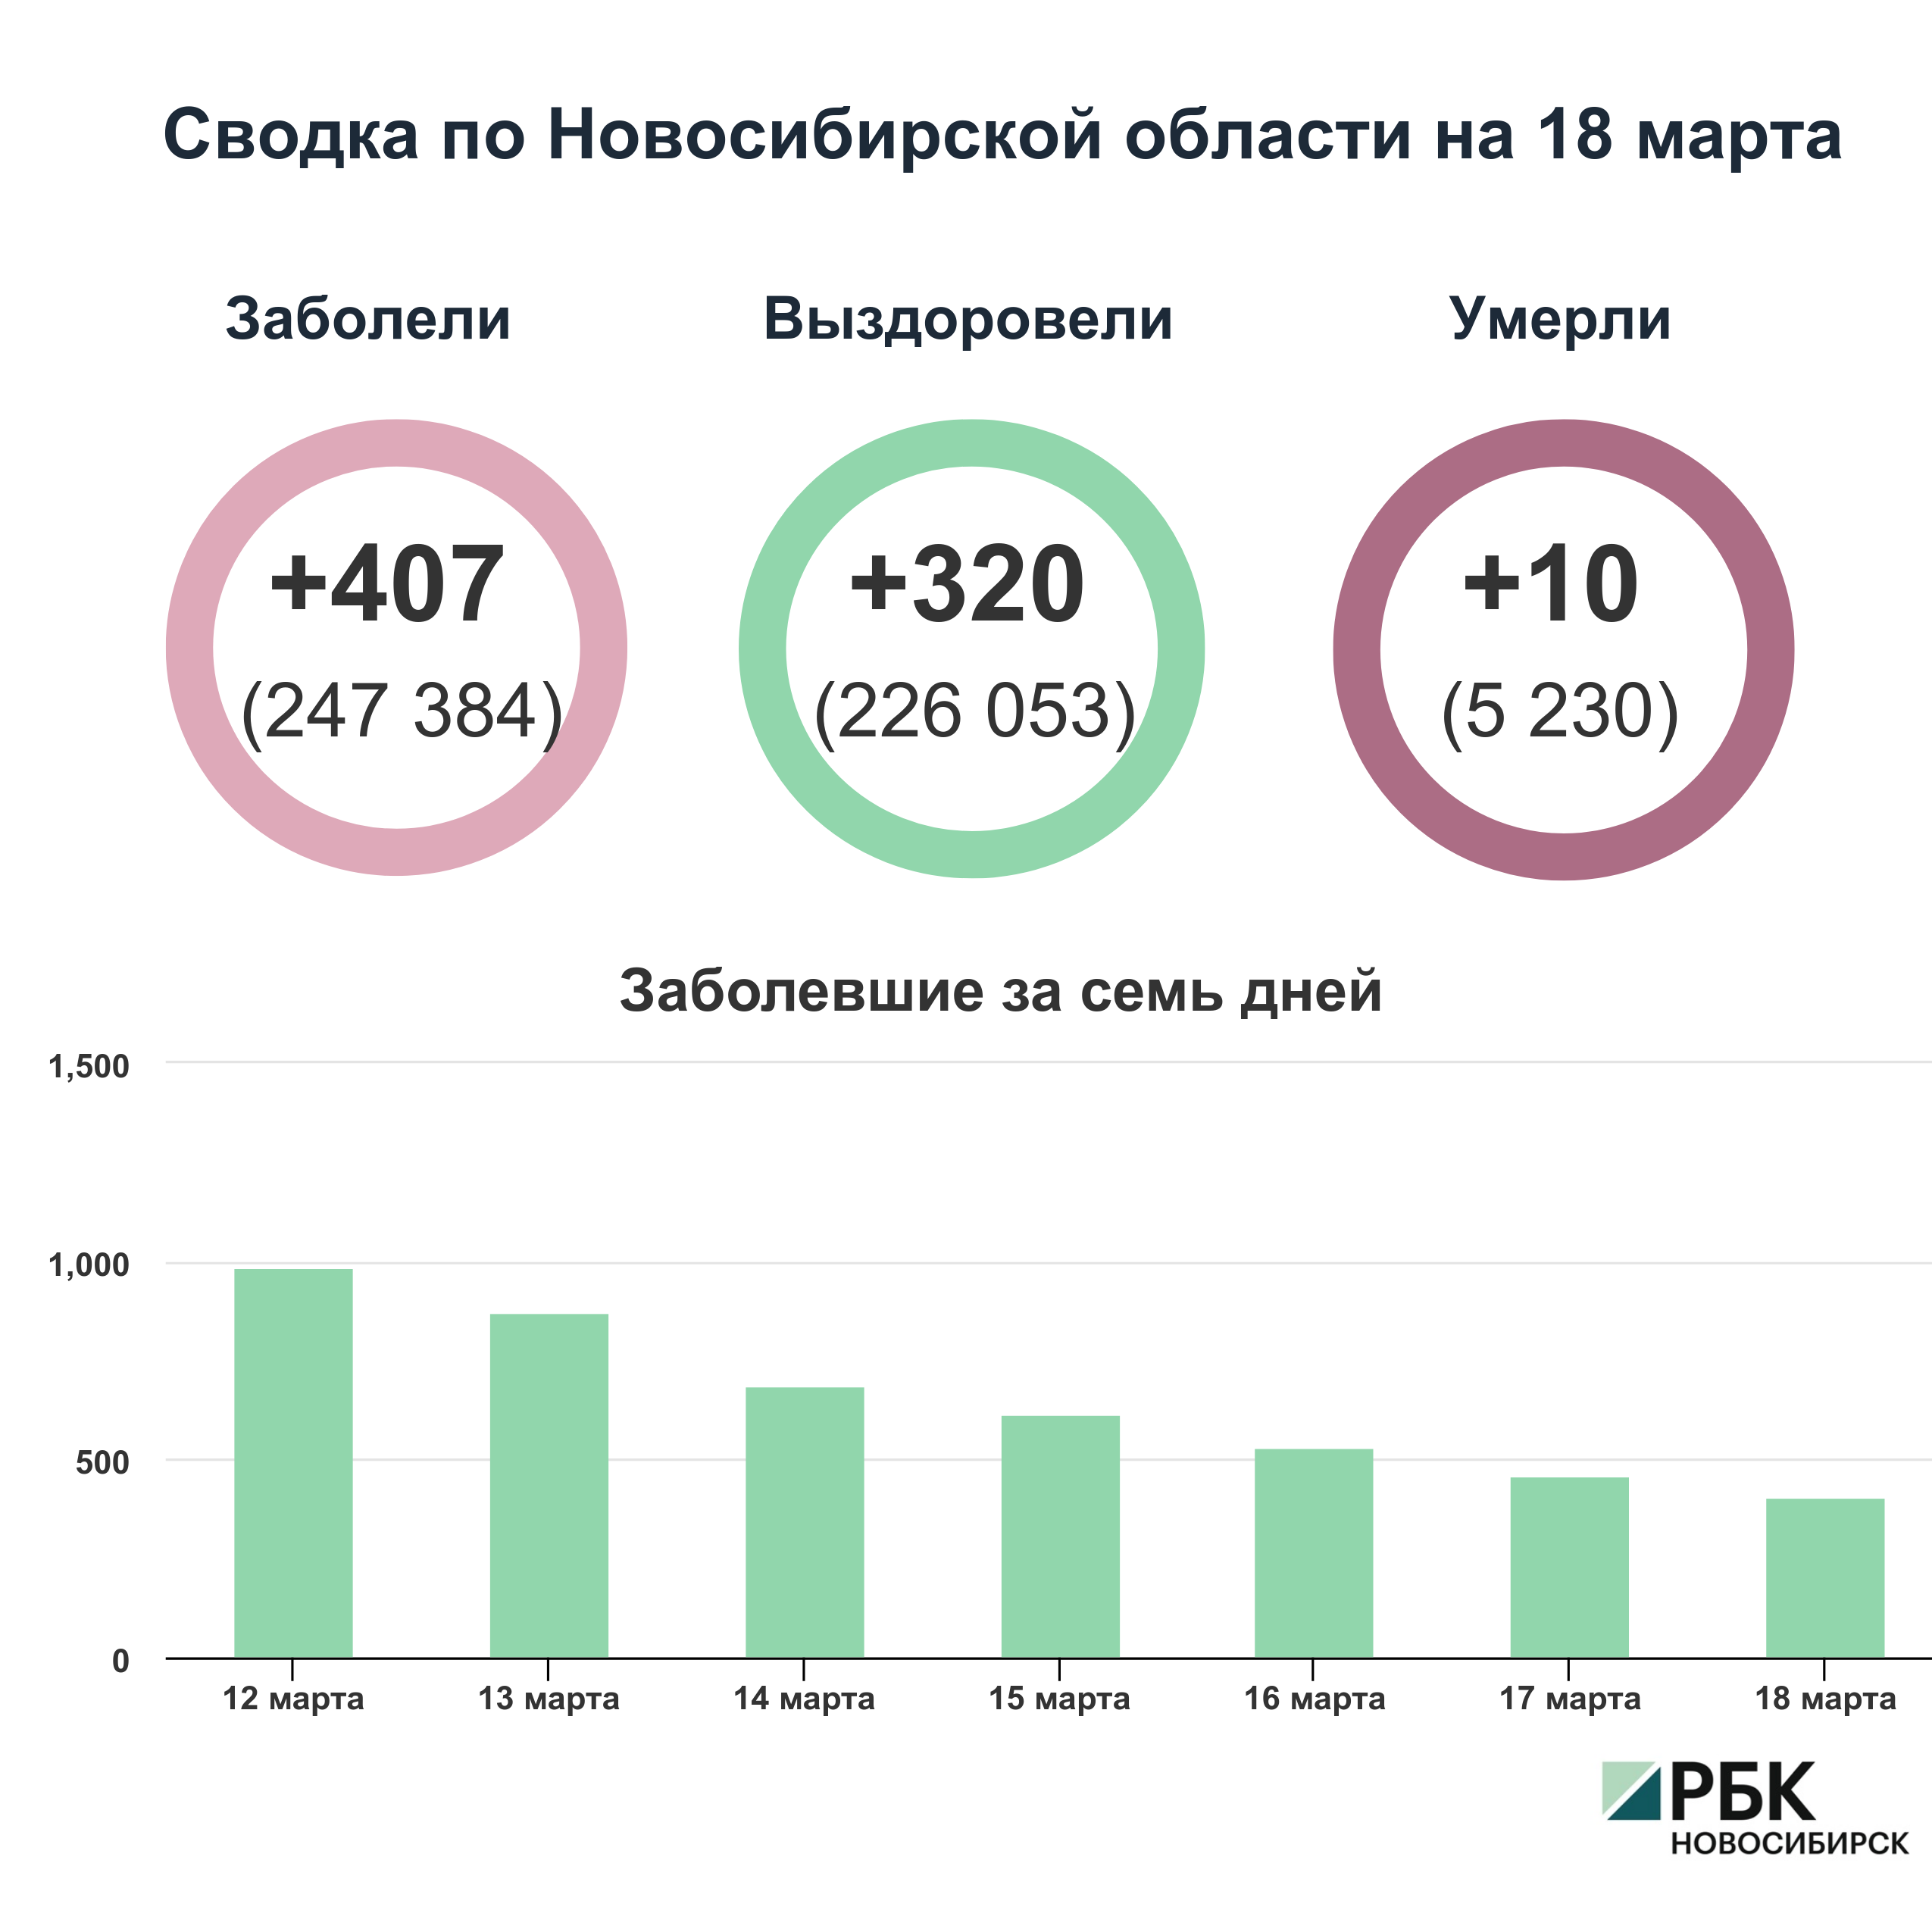 Коронавирус в Новосибирске: сводка на 18 марта